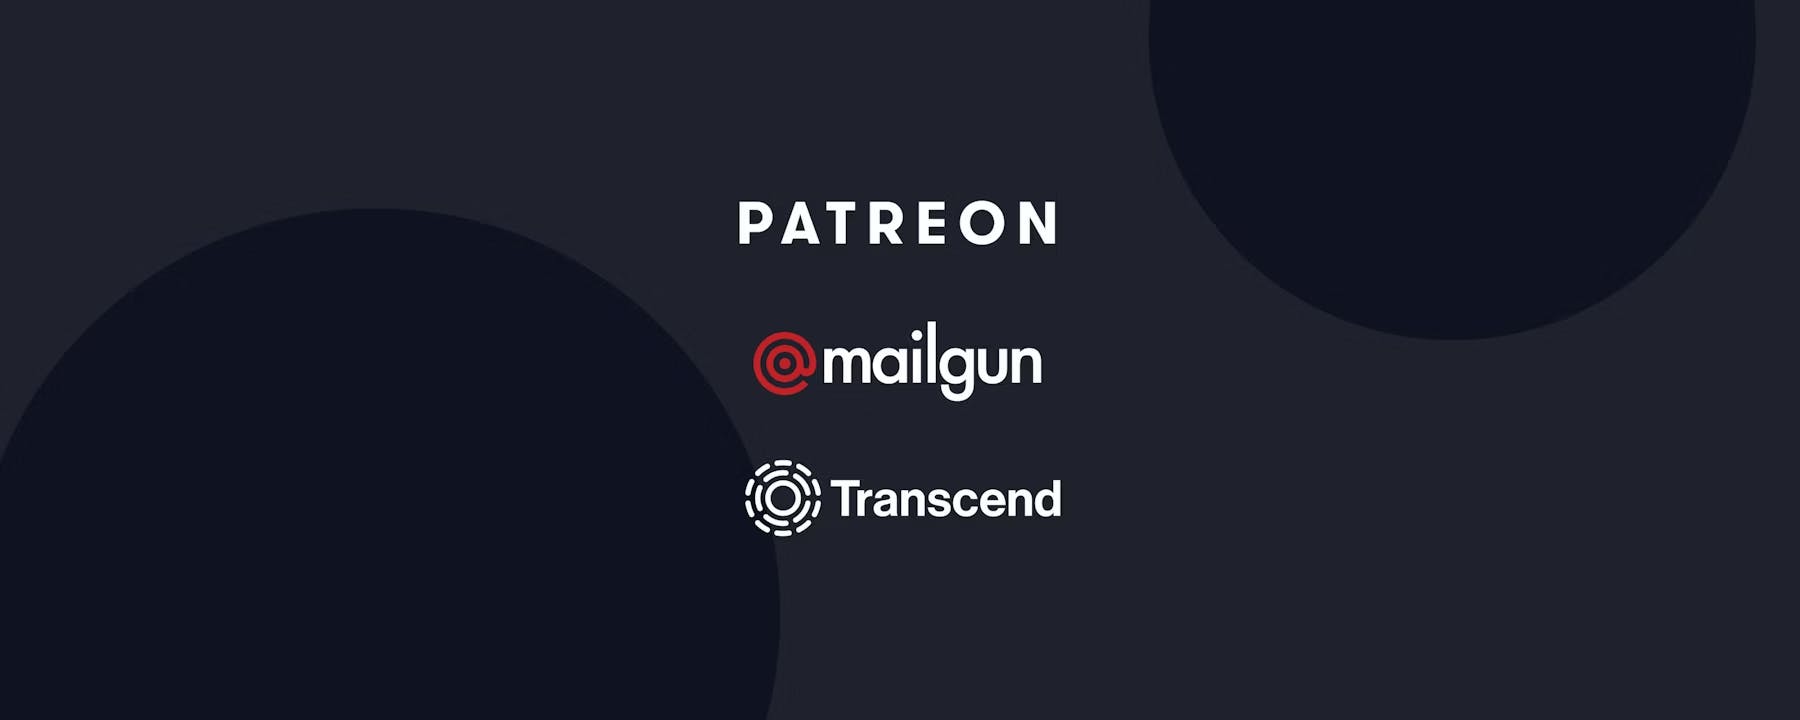 Patreon, Mailgun, Transcend logos